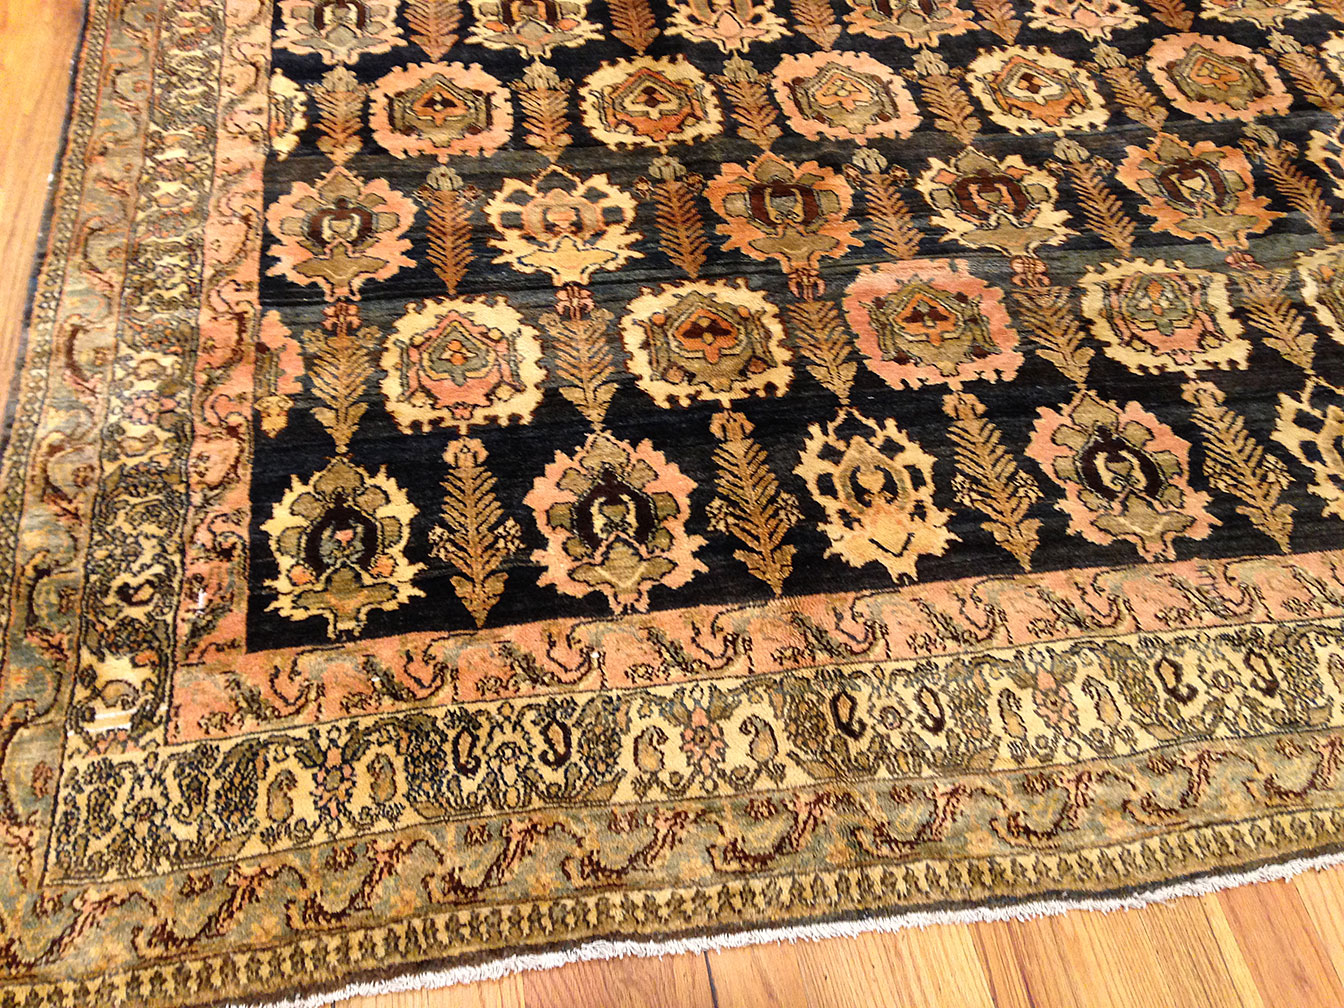 Antique bibi kabad Carpet - # 9685